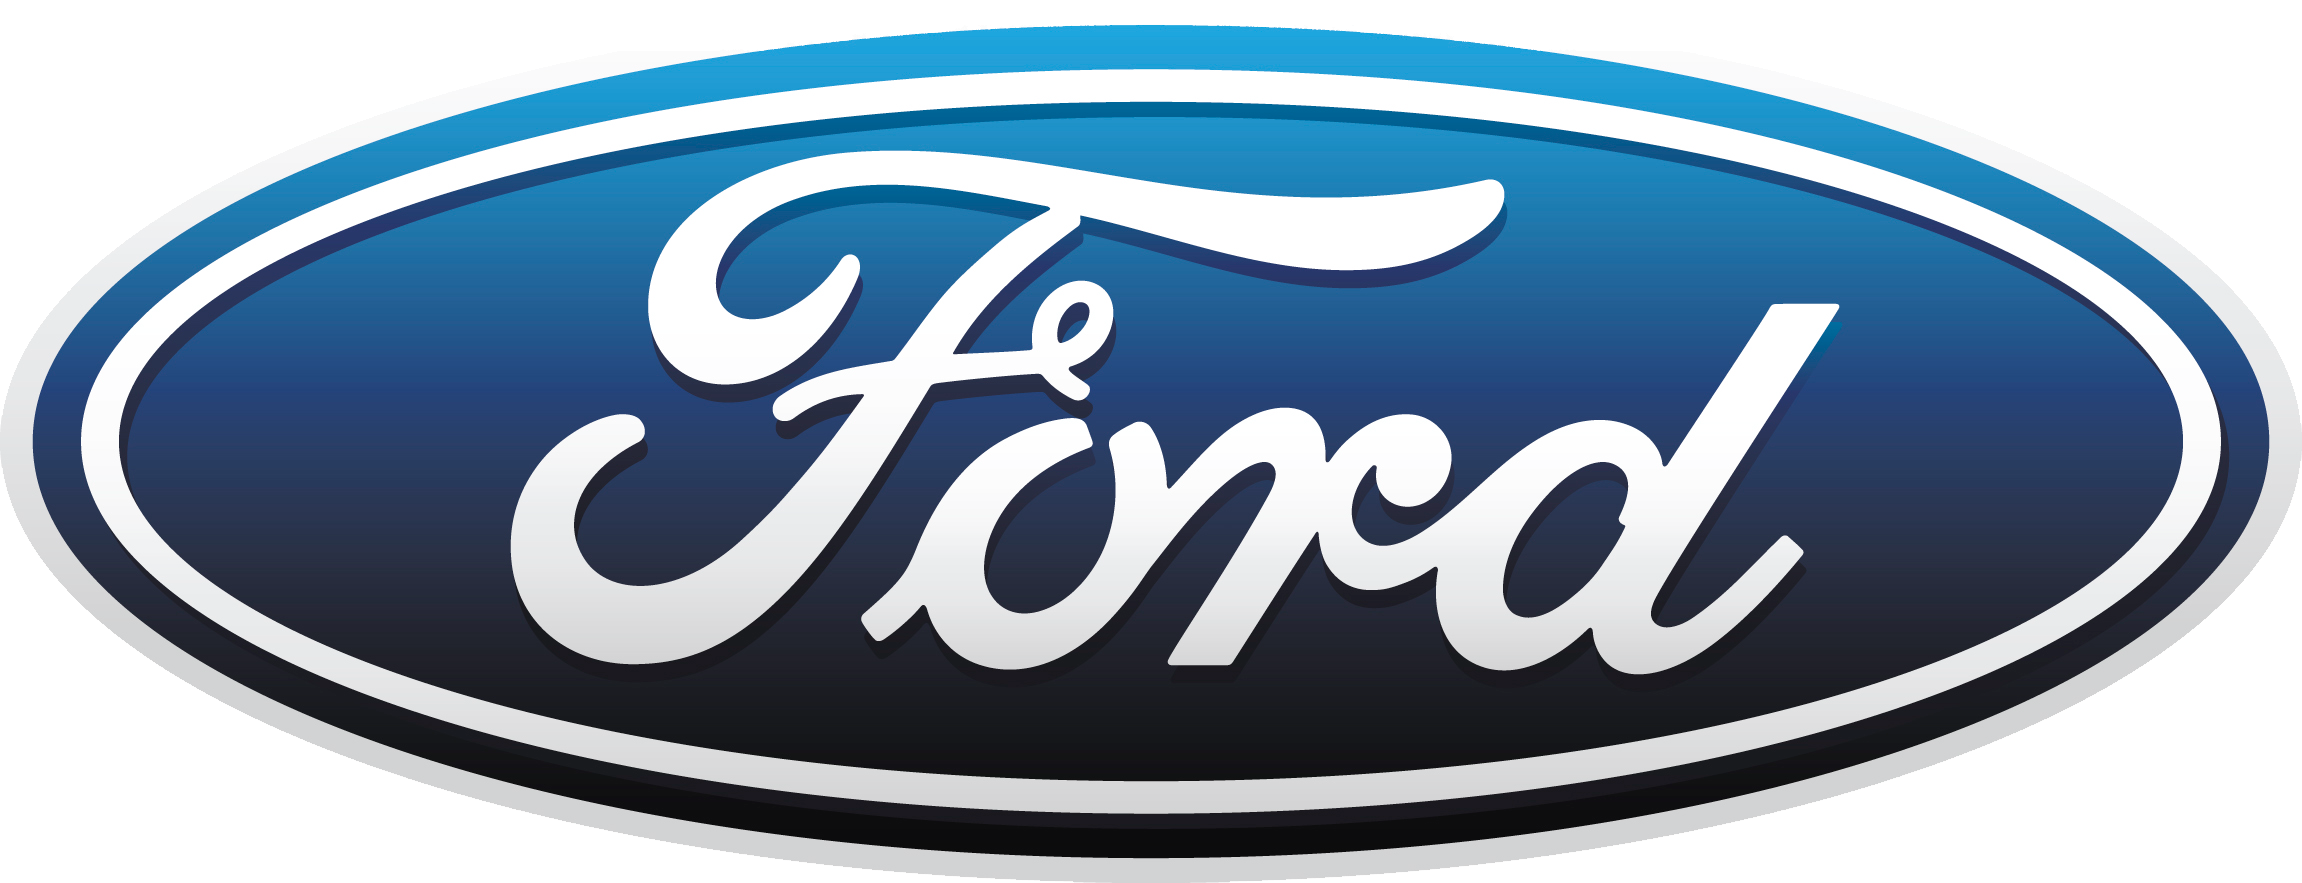 ford car logo 